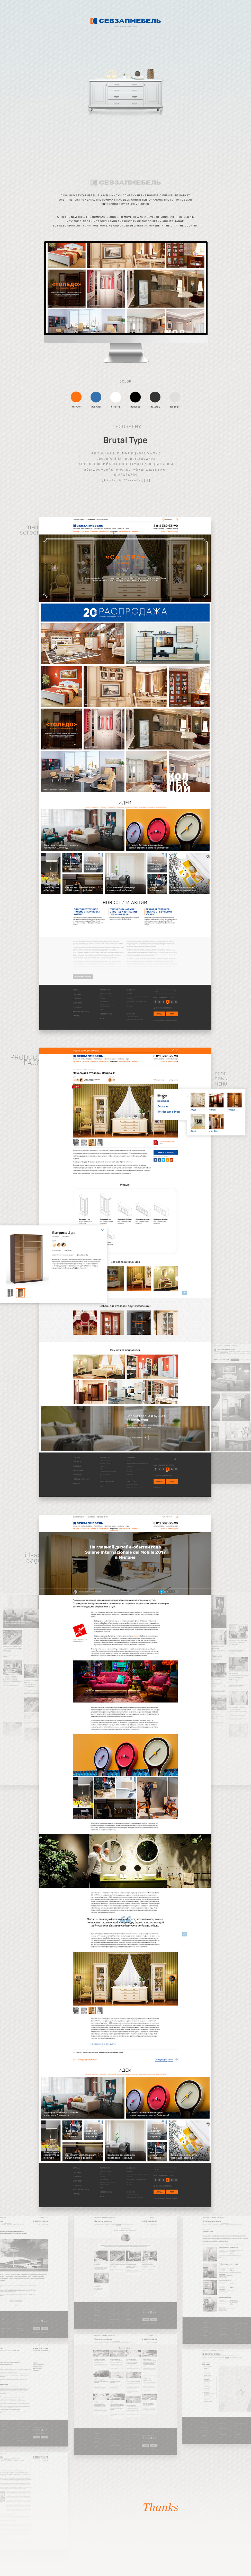 furniture design Web szm site shop e-commerce